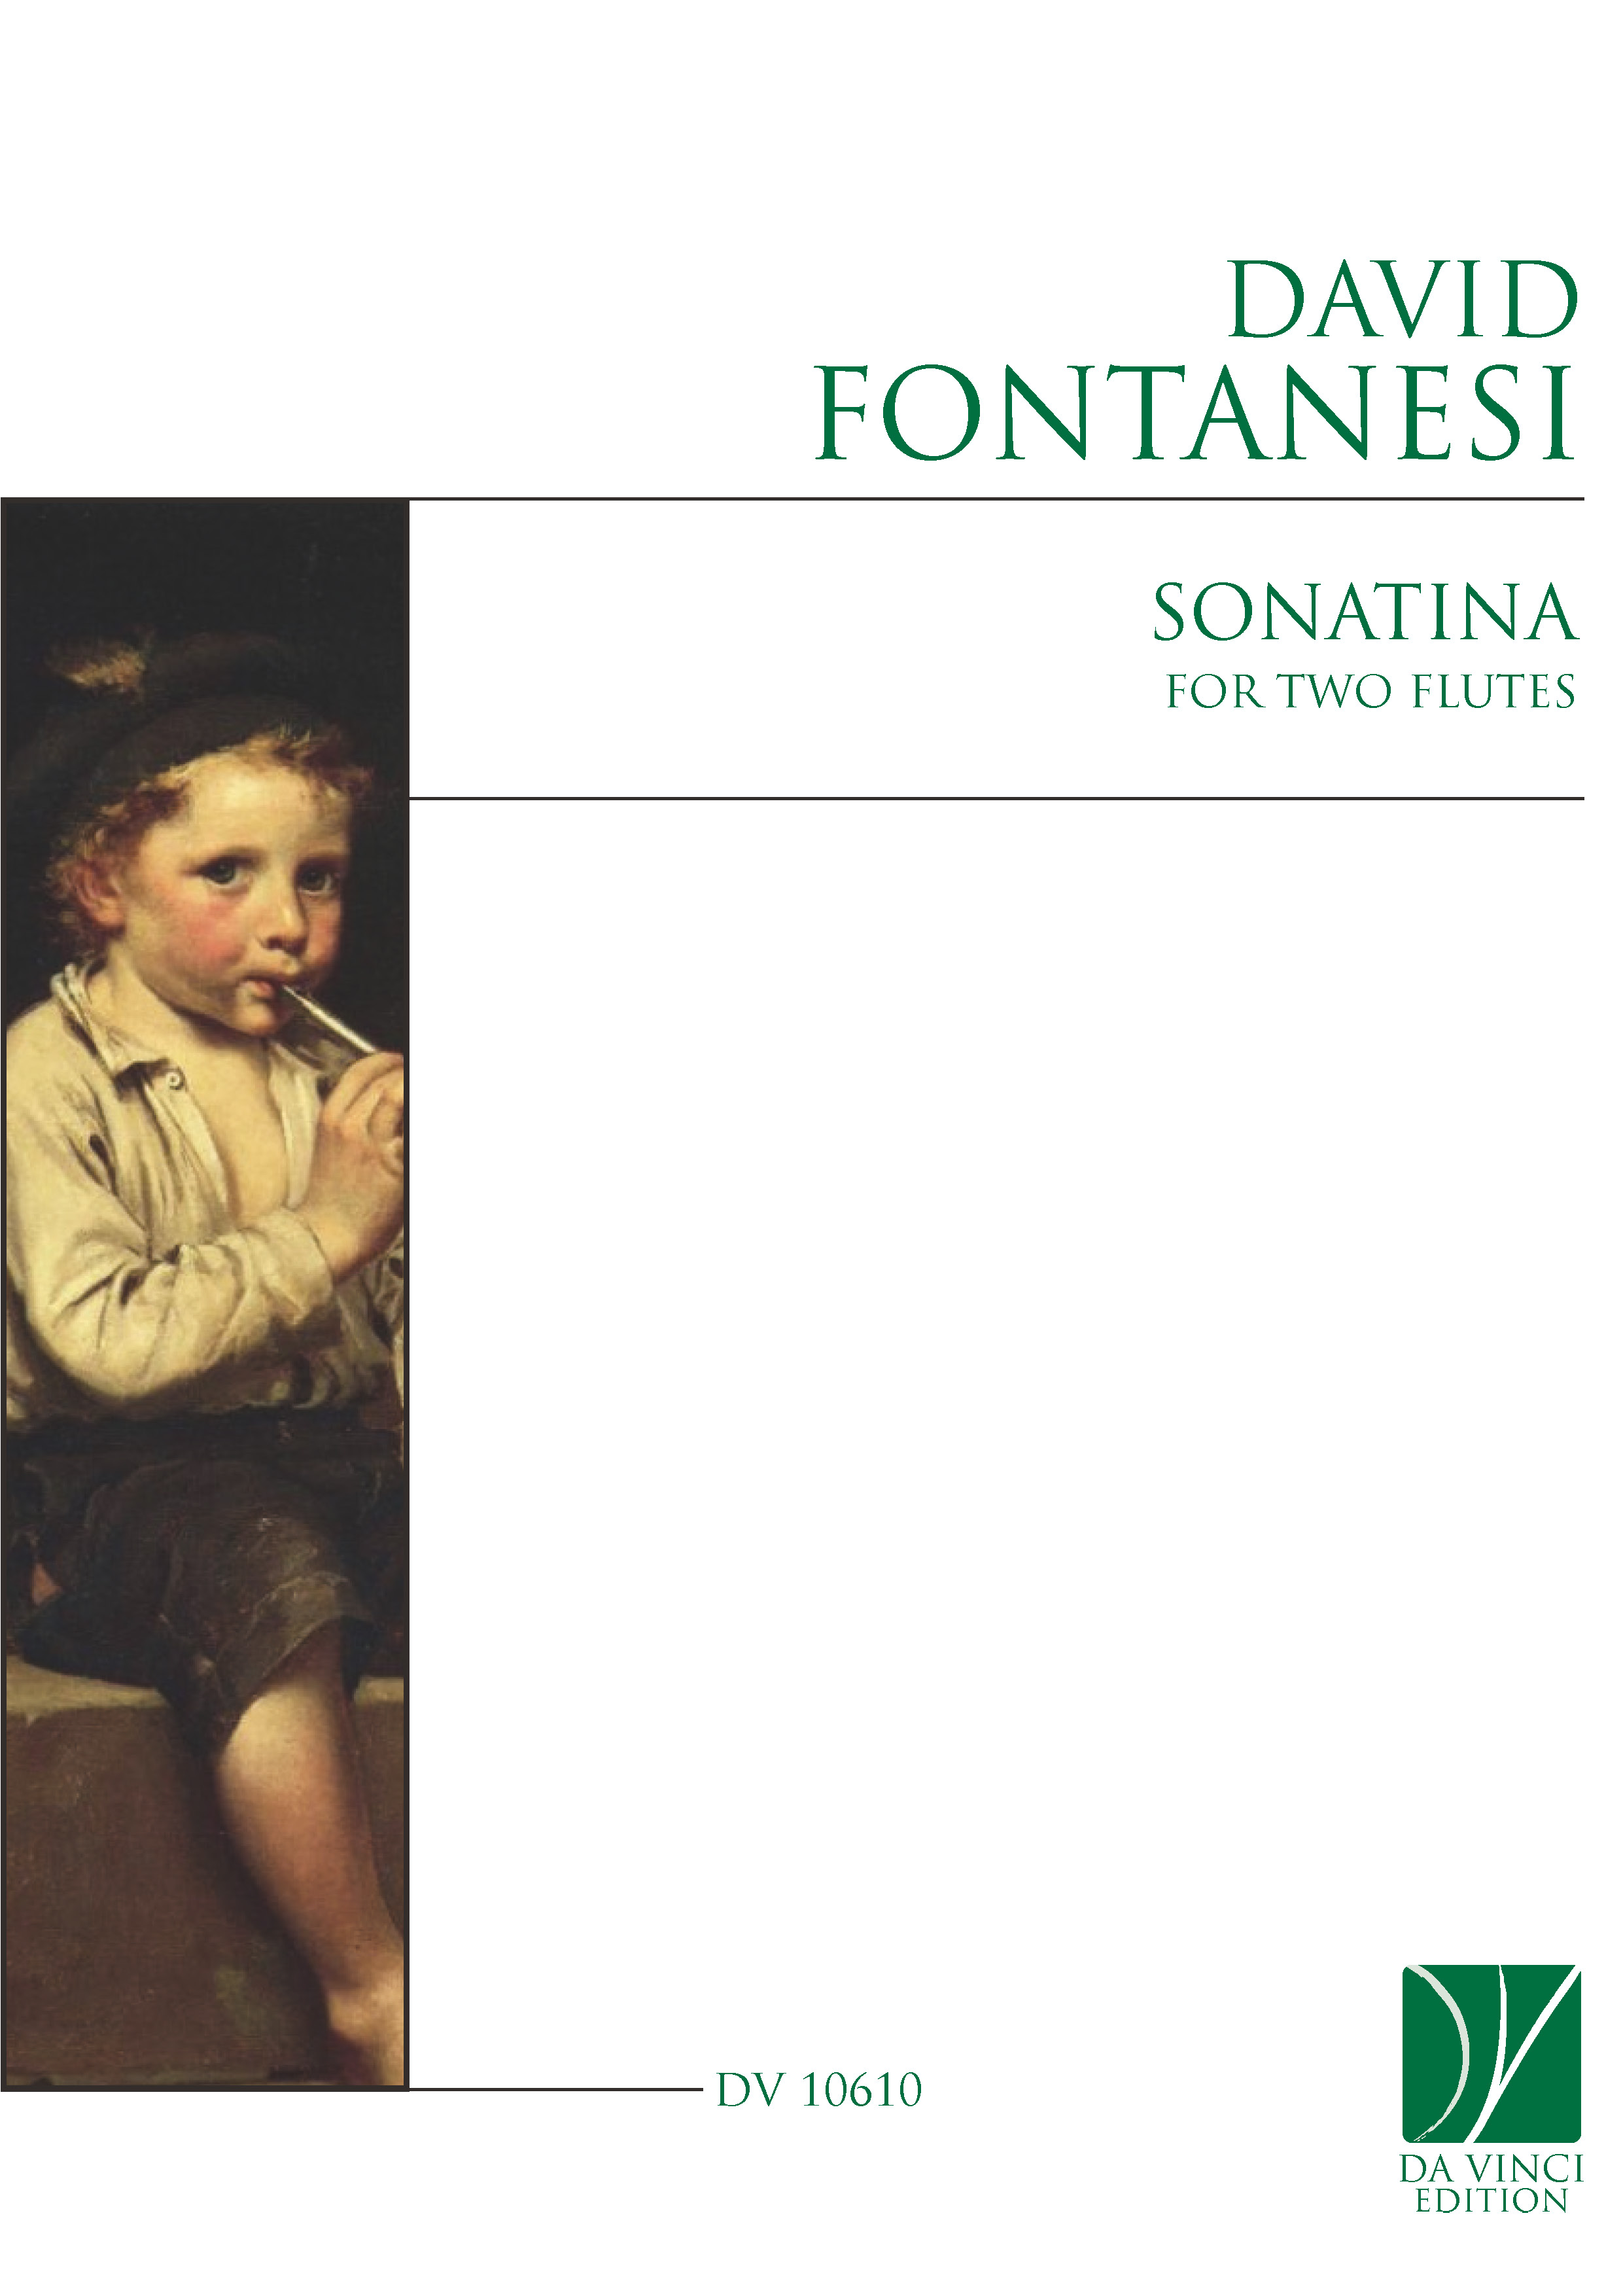 DV 10610 - Cover (Fontanesi - Sonatina)